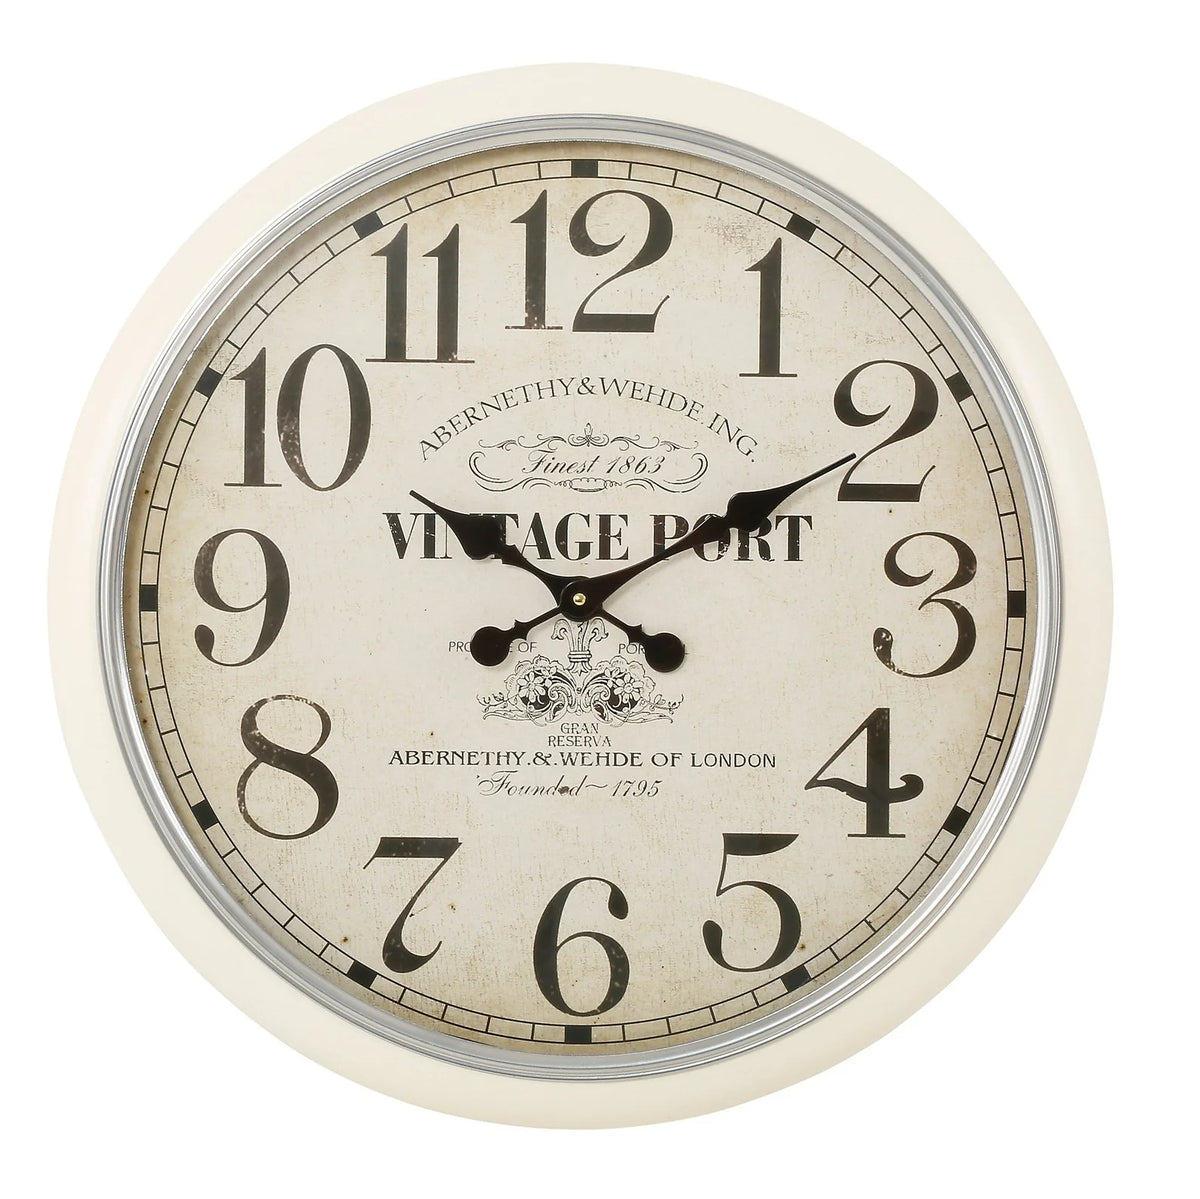 Vintage Port Clock - Shabby Chic Style